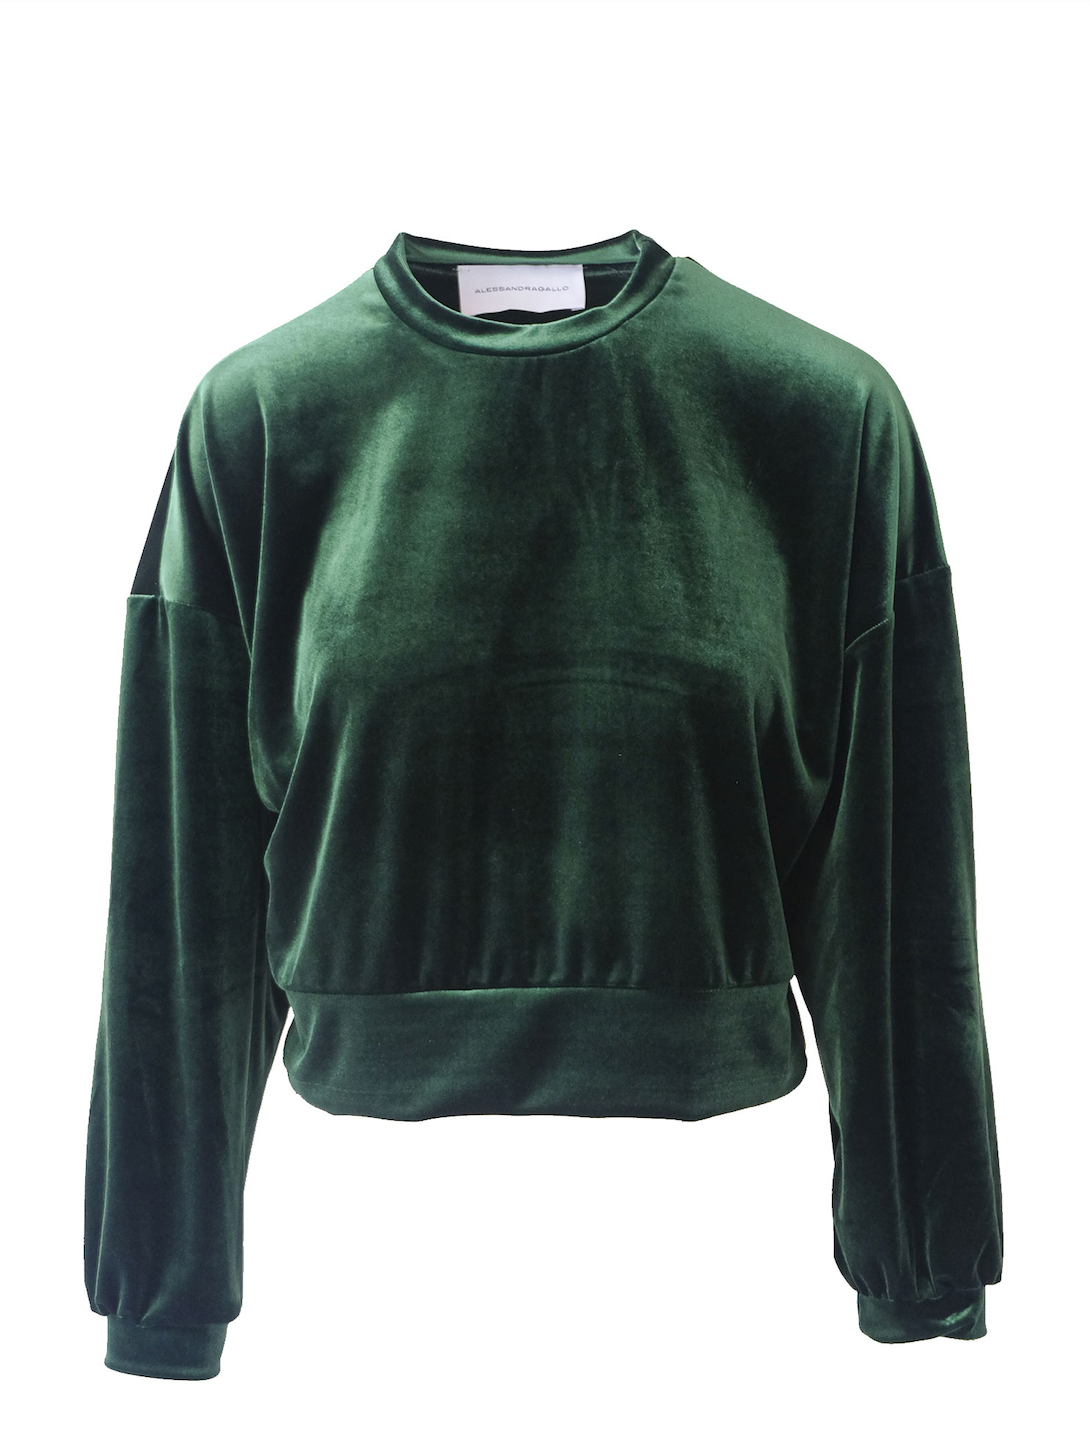 IOLE - cropped sweatshirt in emerald green chenille